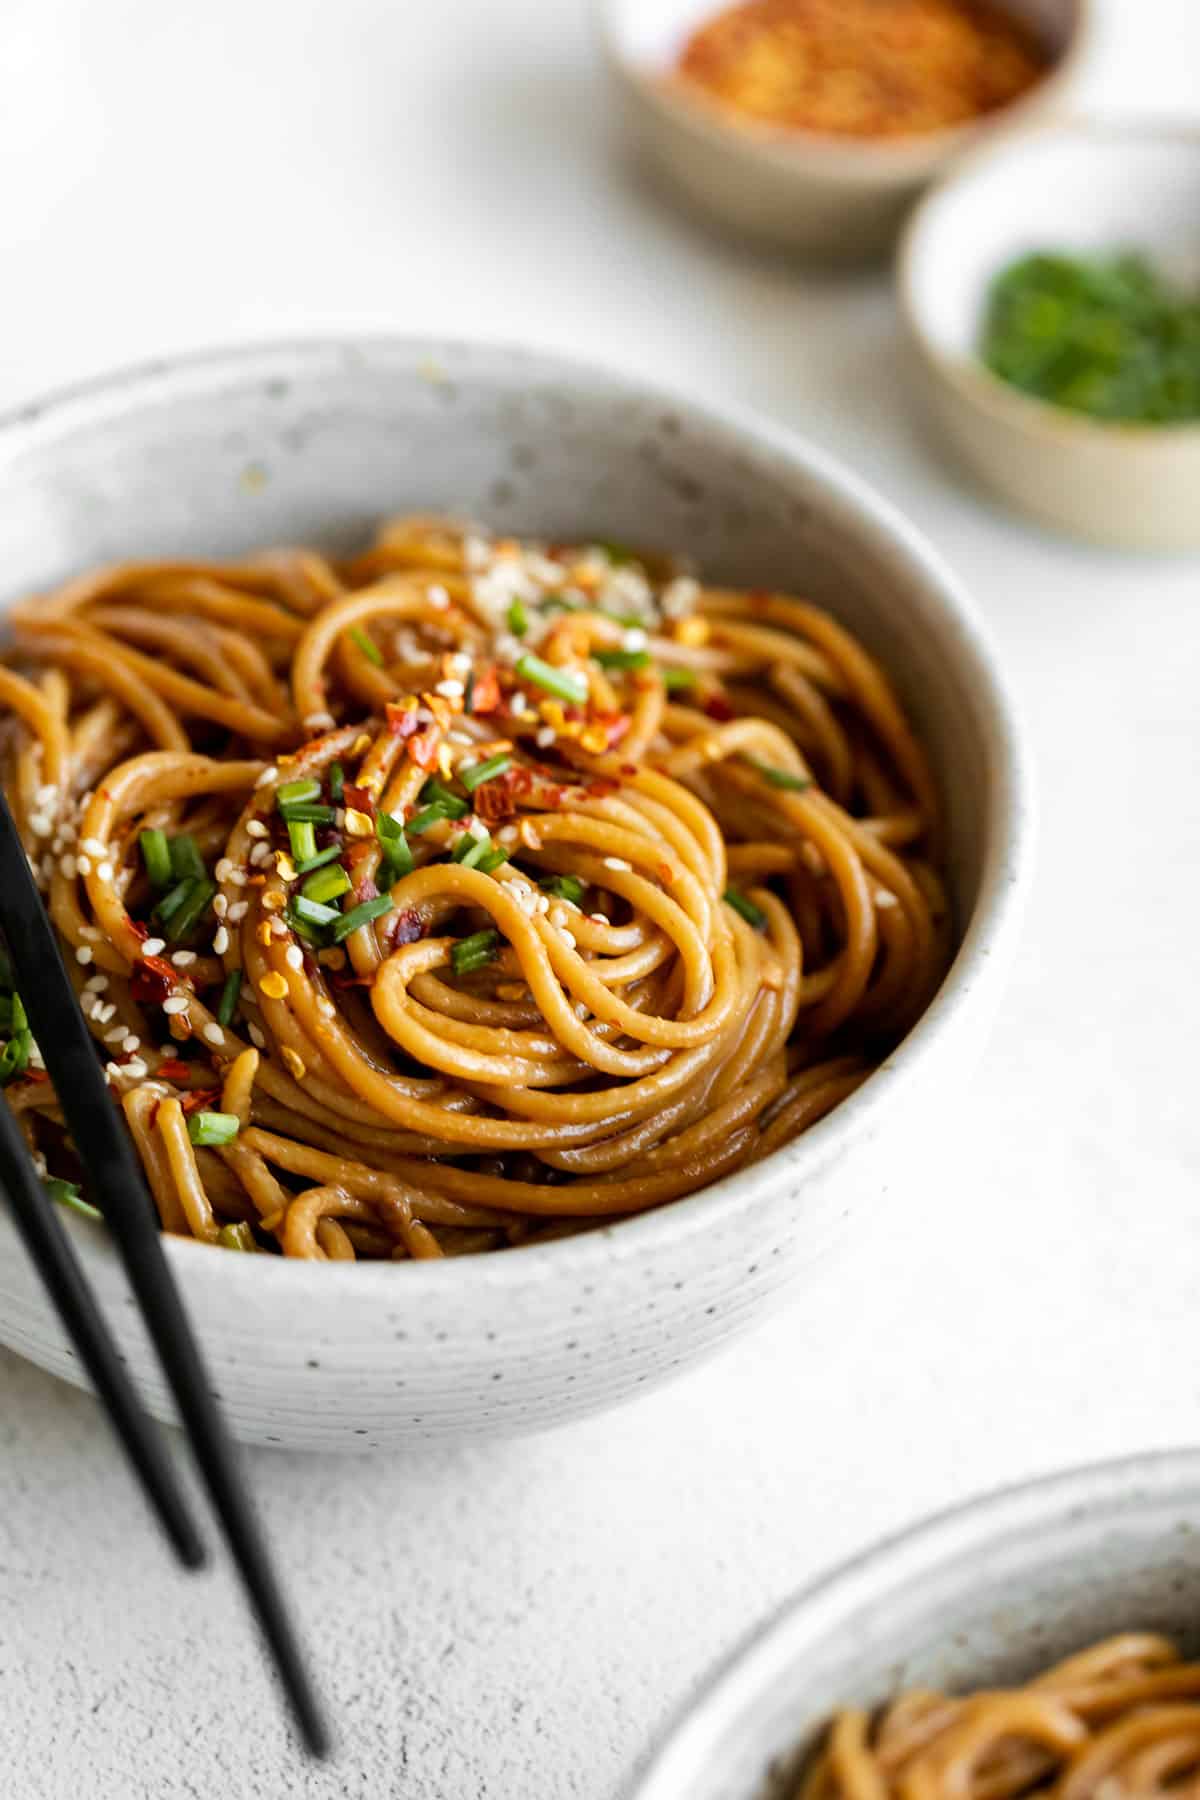 Up close image of garlic sesame noodles with chopsticks on the side.